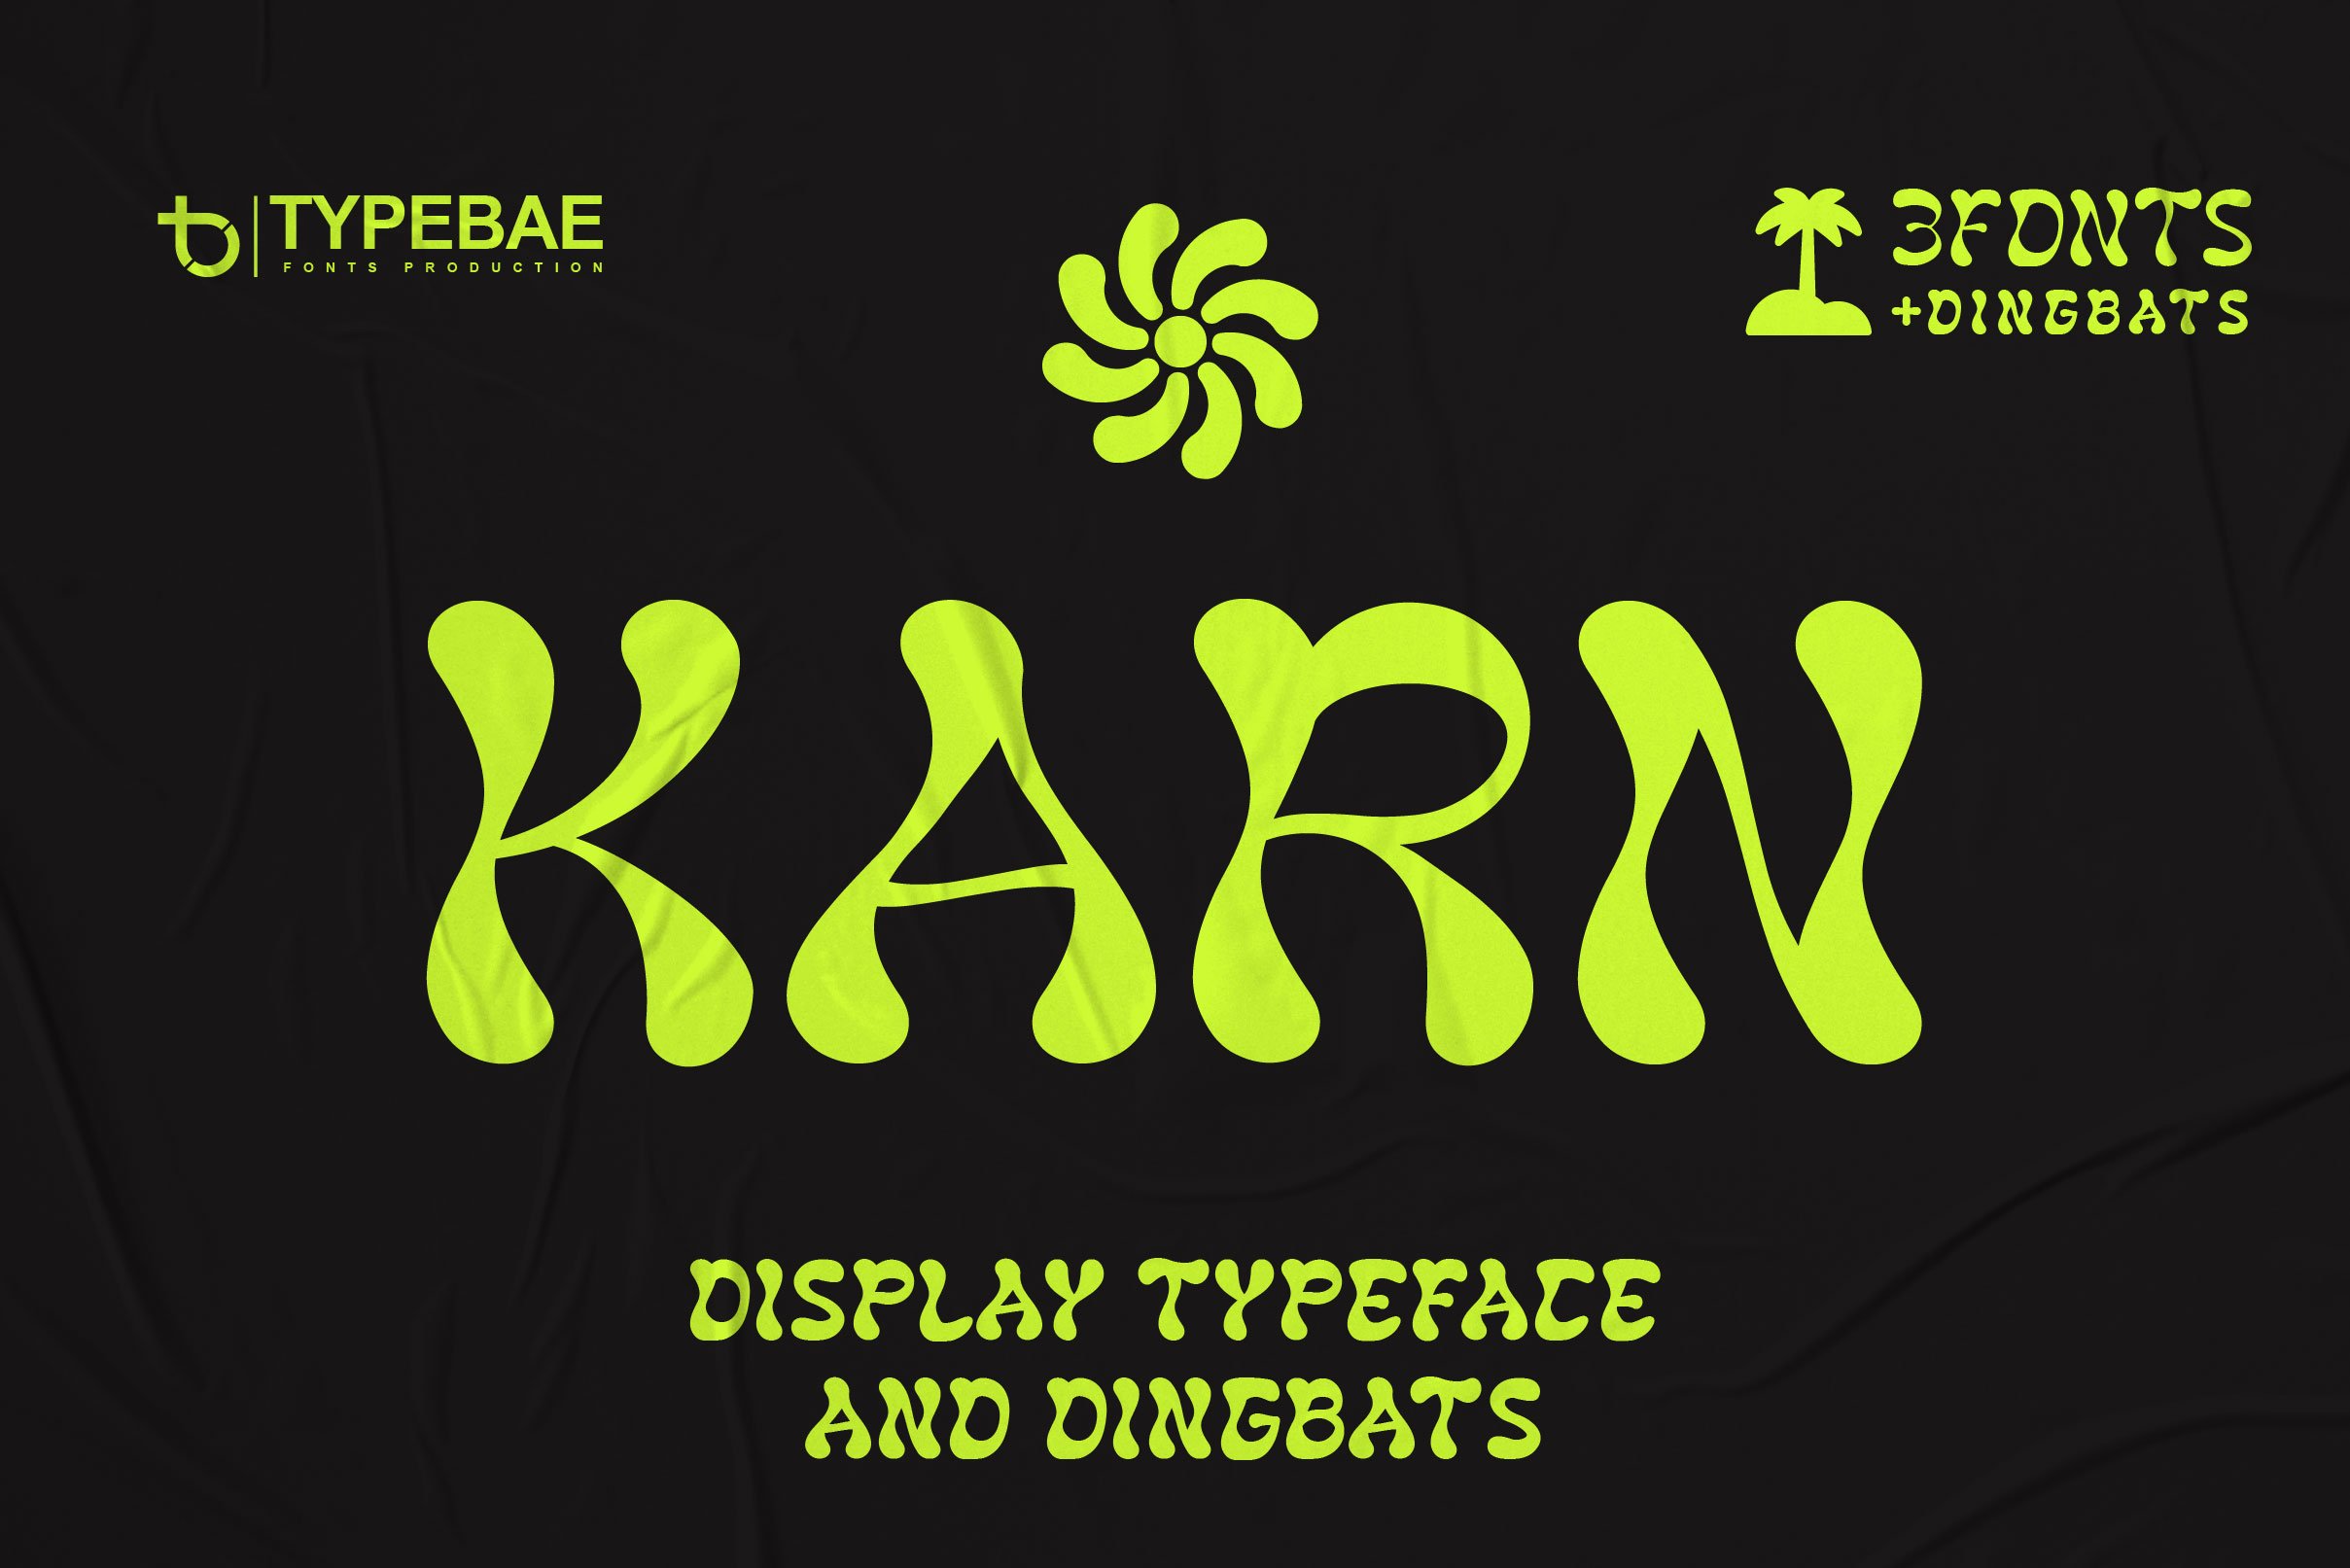 KARN - Display Typeface & Dingbats cover image.